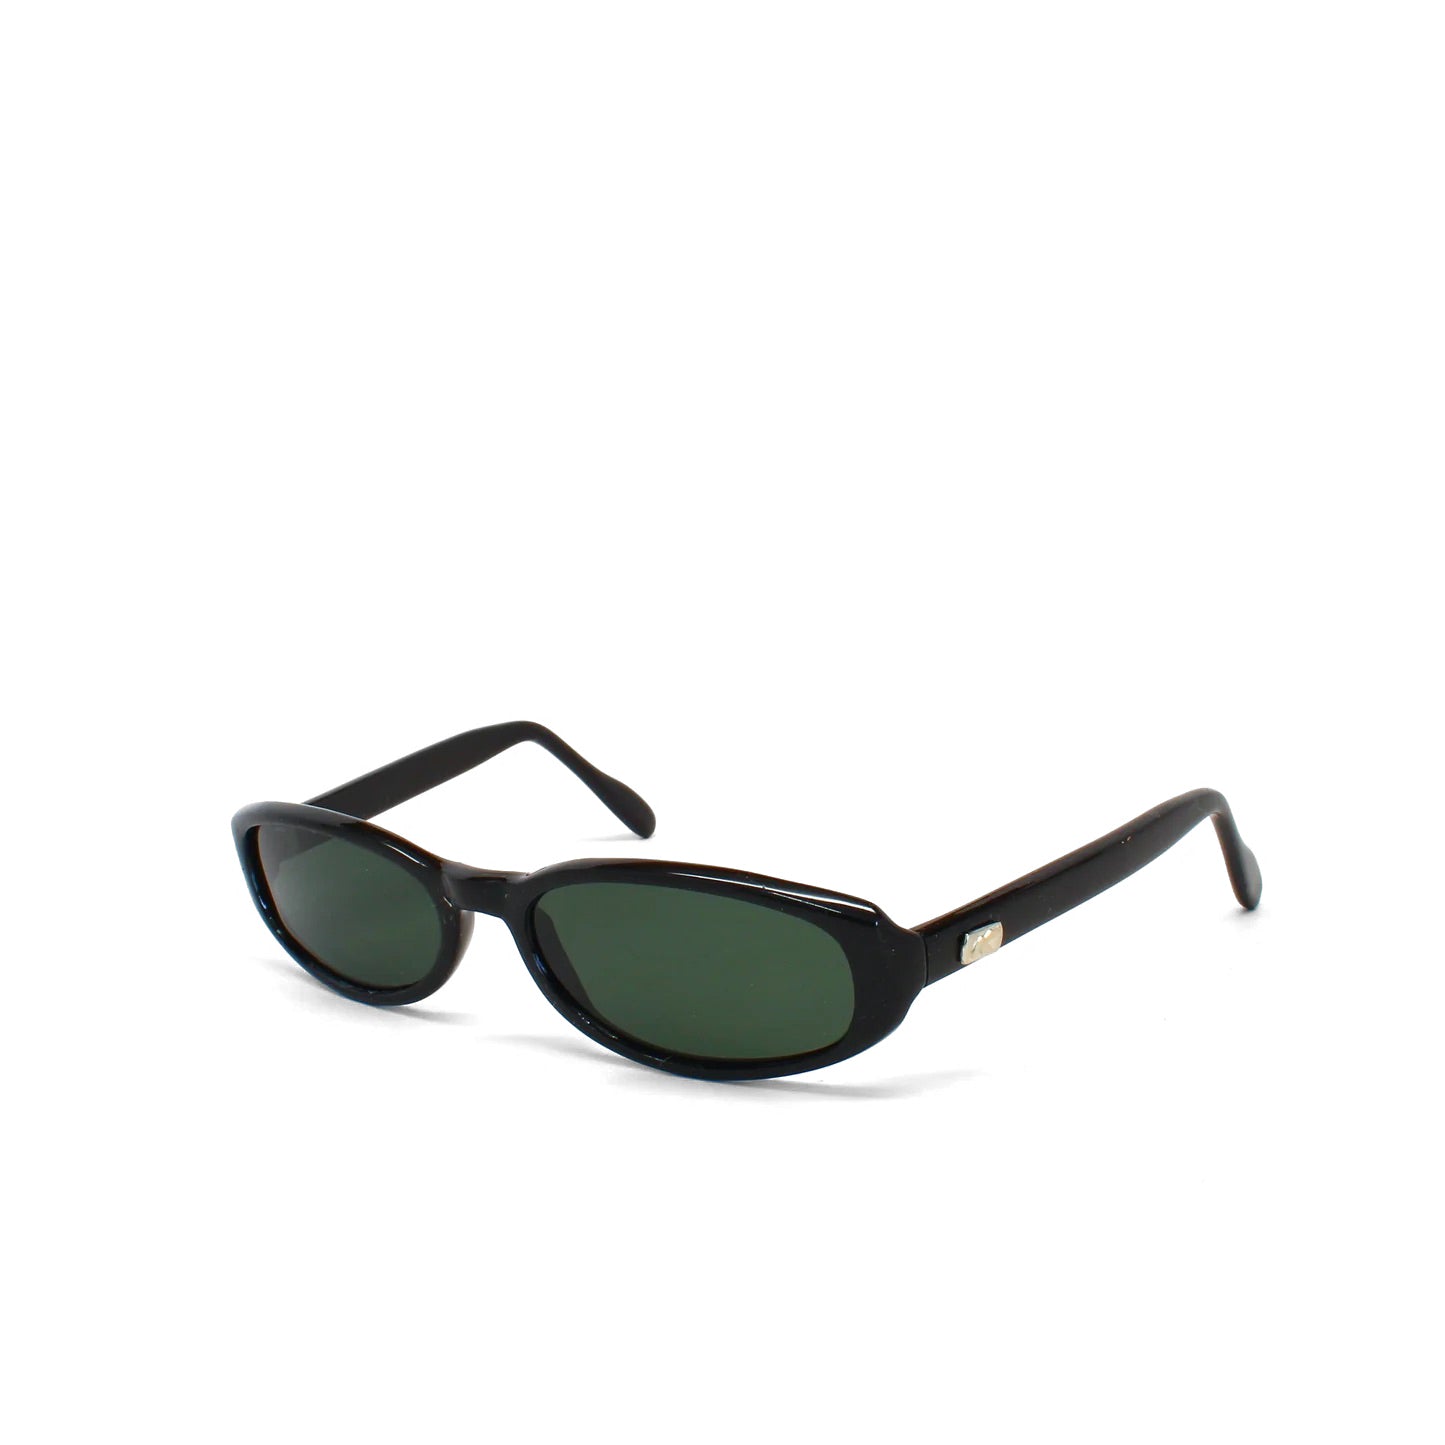 Vintage Small Size 90s Deadstock Jane Original Oval Sunglasses - Black